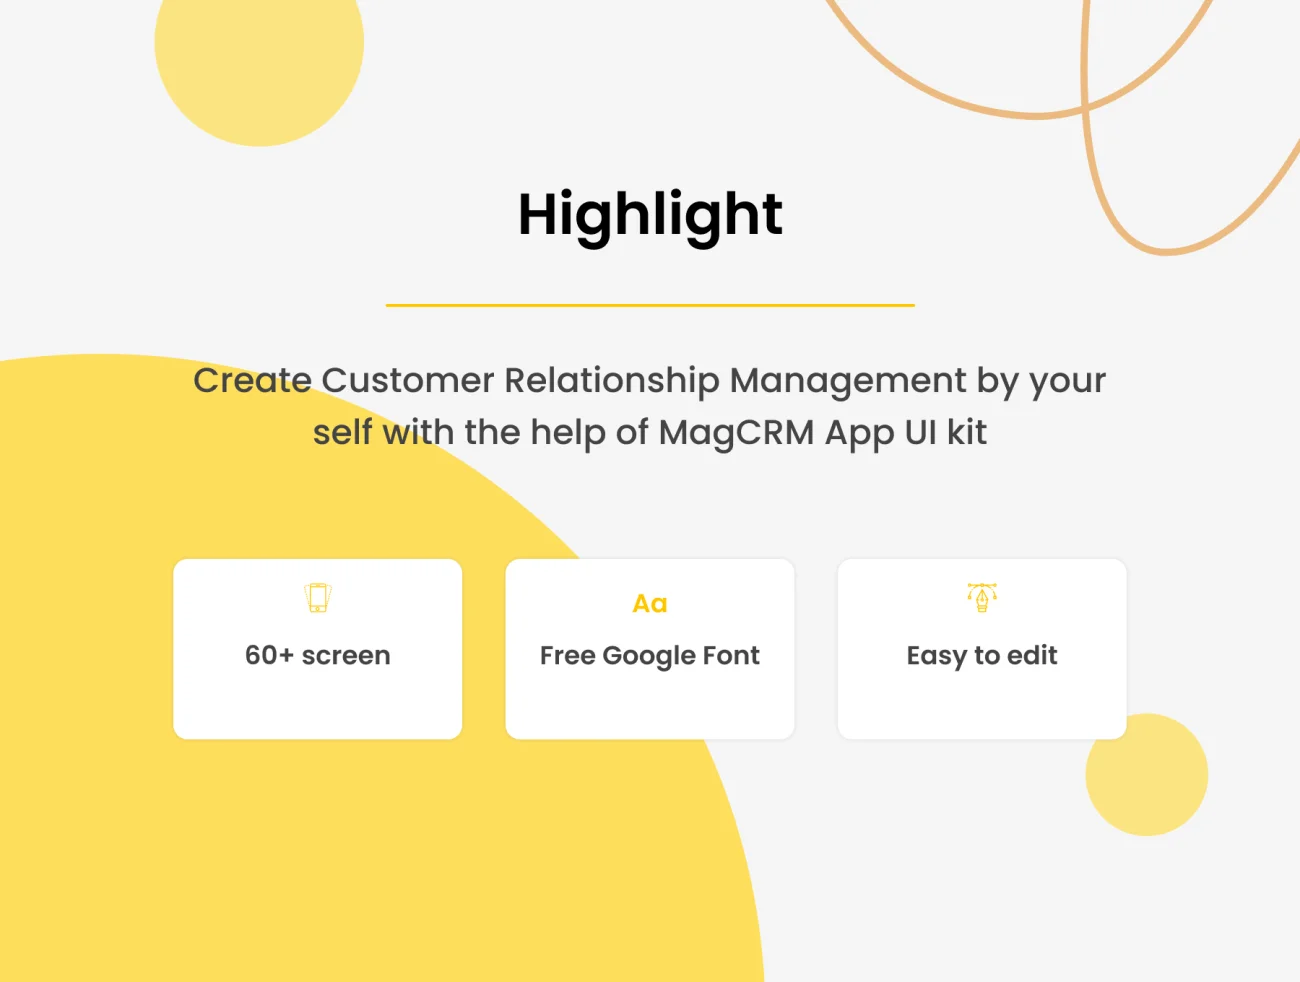 MagCRM Customer Relationship Management Mobile App UI Kit  客户关系管理移动应用UI设计套件-UI/UX-到位啦UI